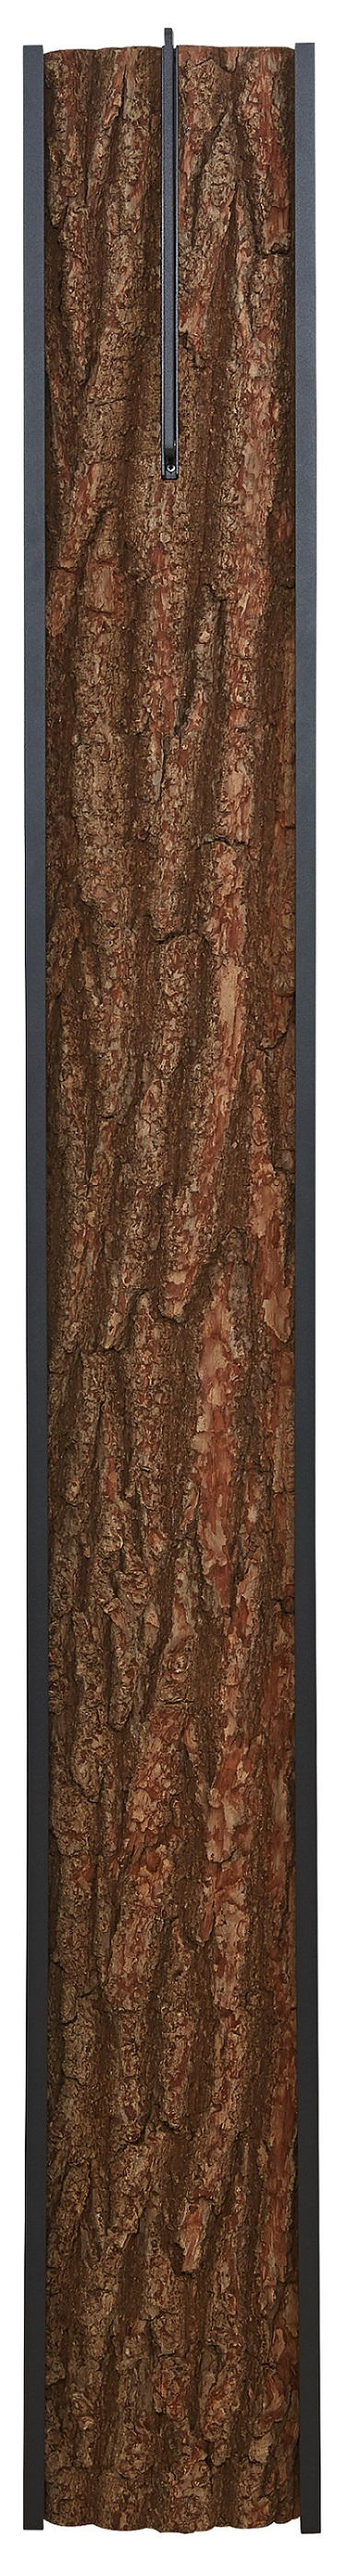 GARDEROBENPANEEL Kerneiche vollmassiv Anthrazit, Eichefarben  - Eichefarben/Anthrazit, Design, Holz/Metall (20/174/8cm) - Valnatura